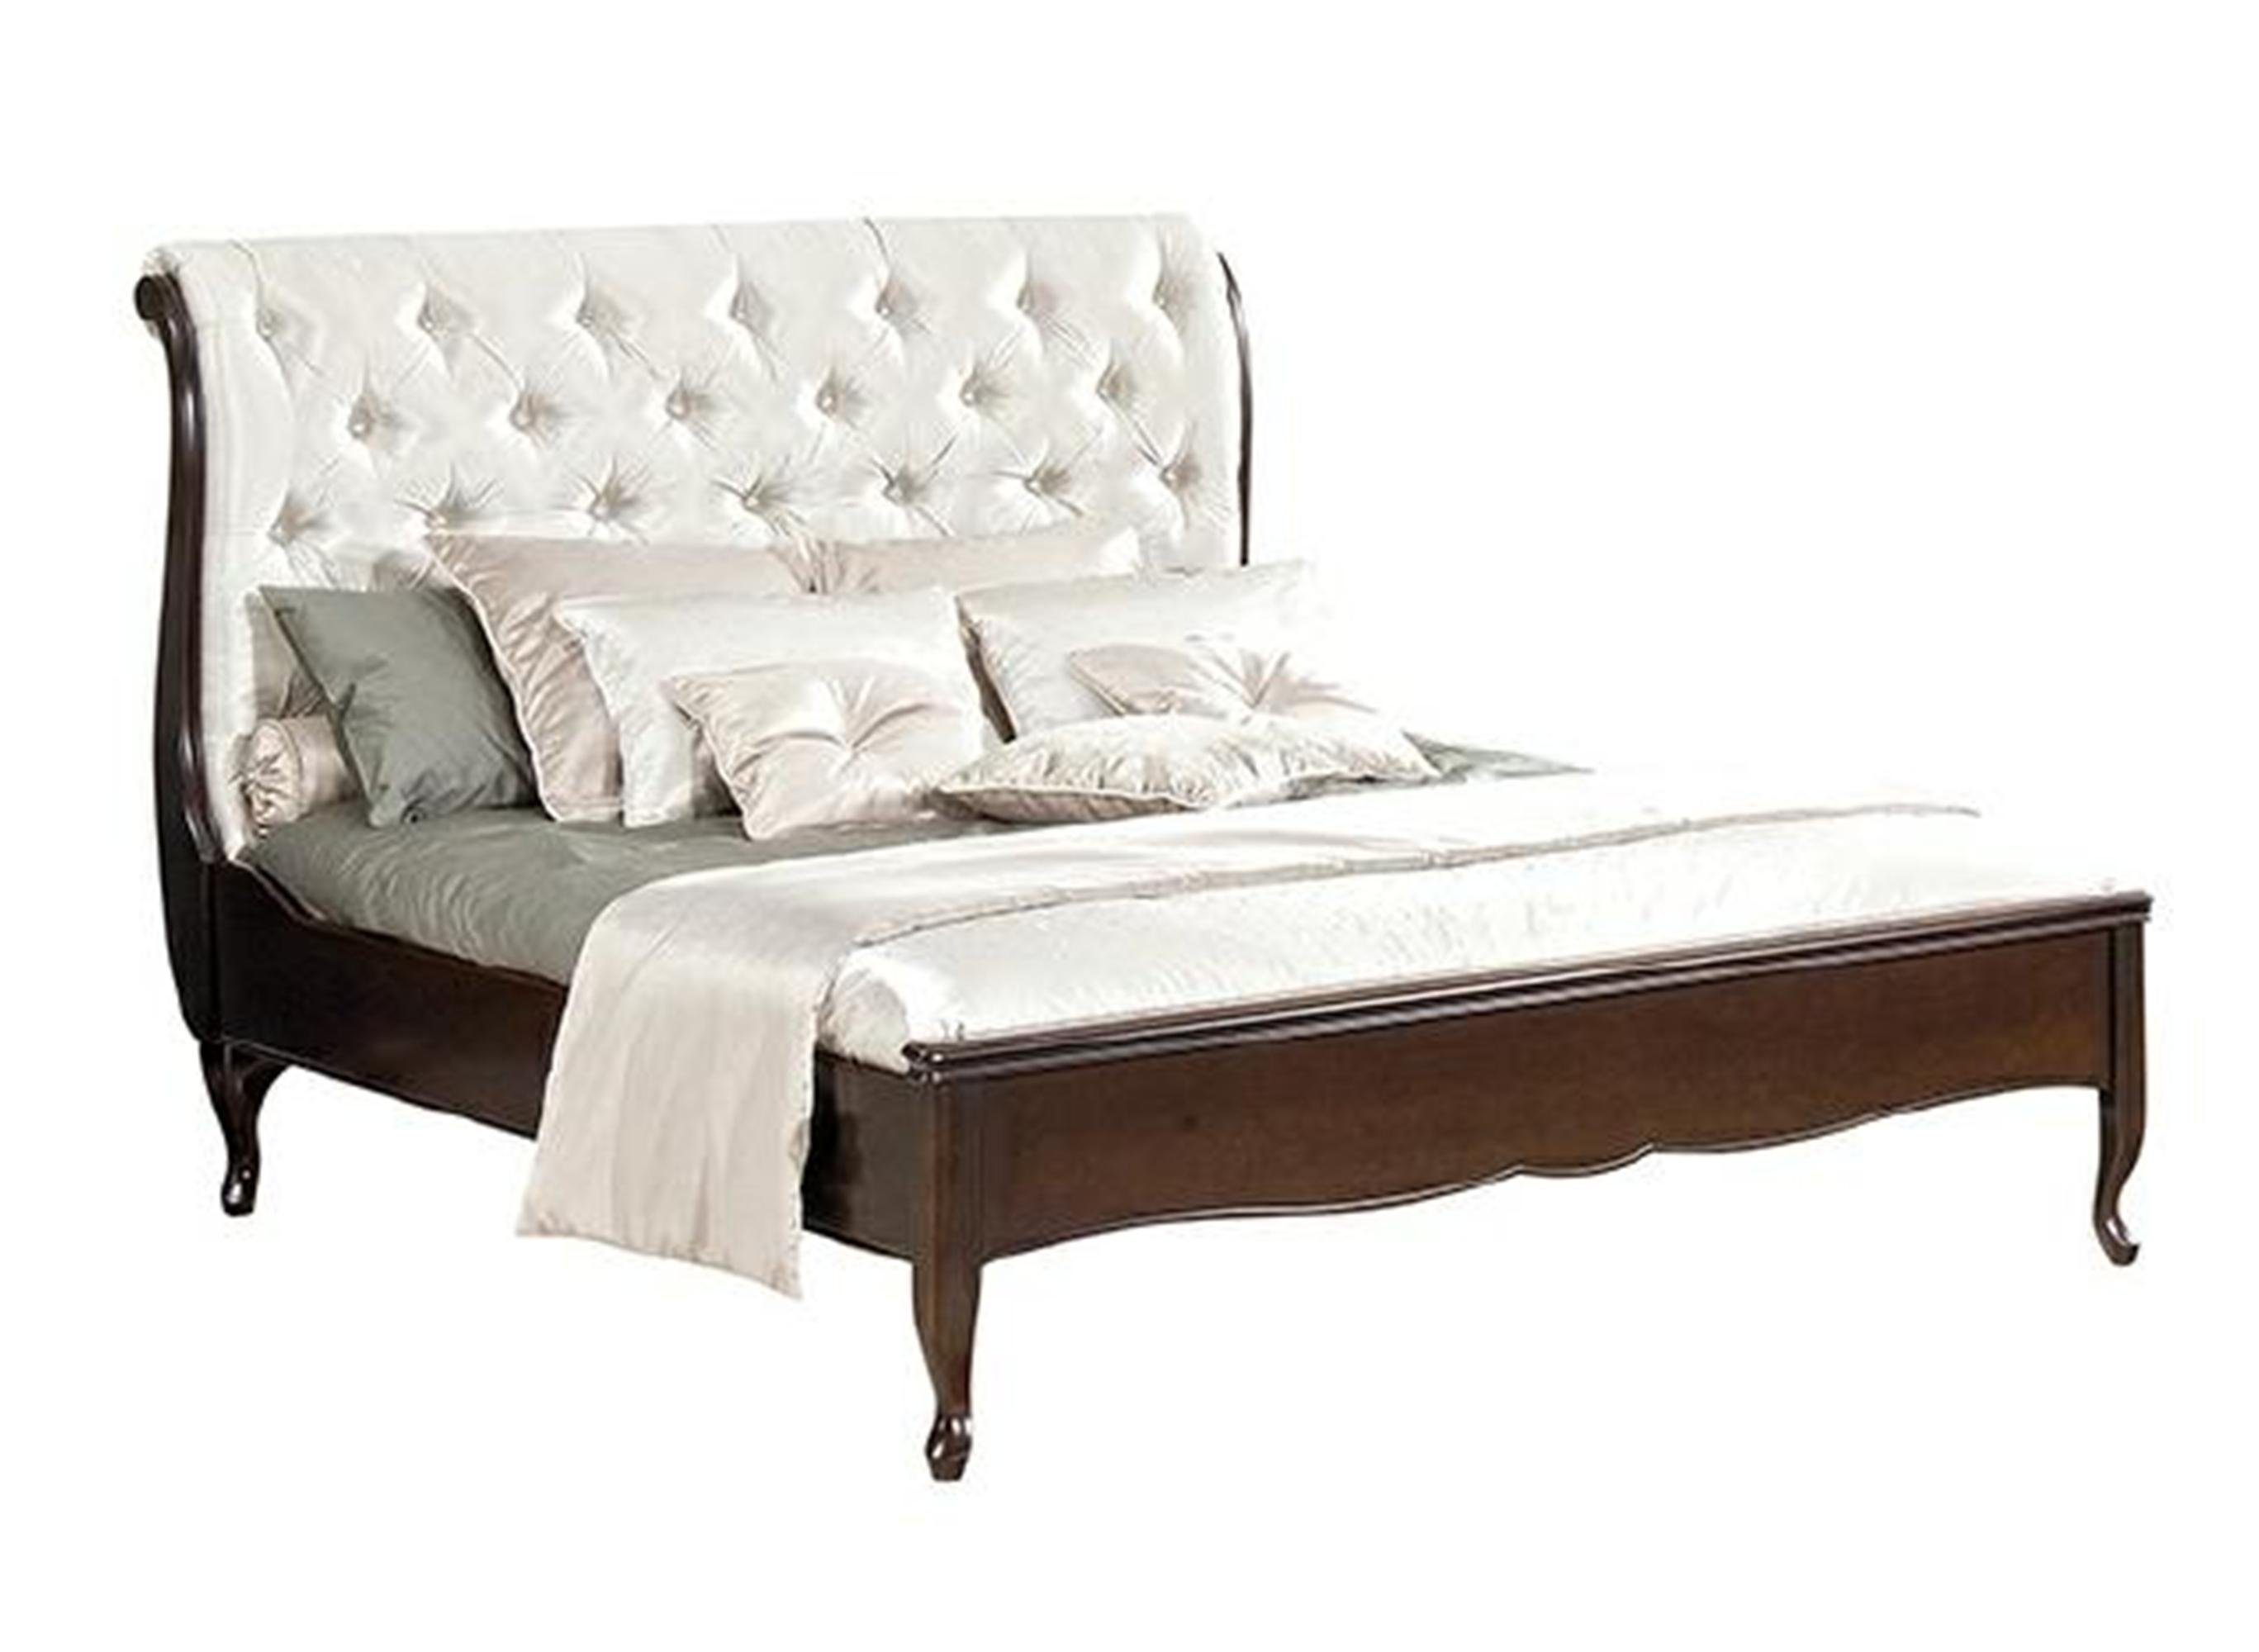 Italienische Möbel JVmoebel Weiß/Braun Doppelbett Bett, Bett Chesterfield Betten Ehebett Holz